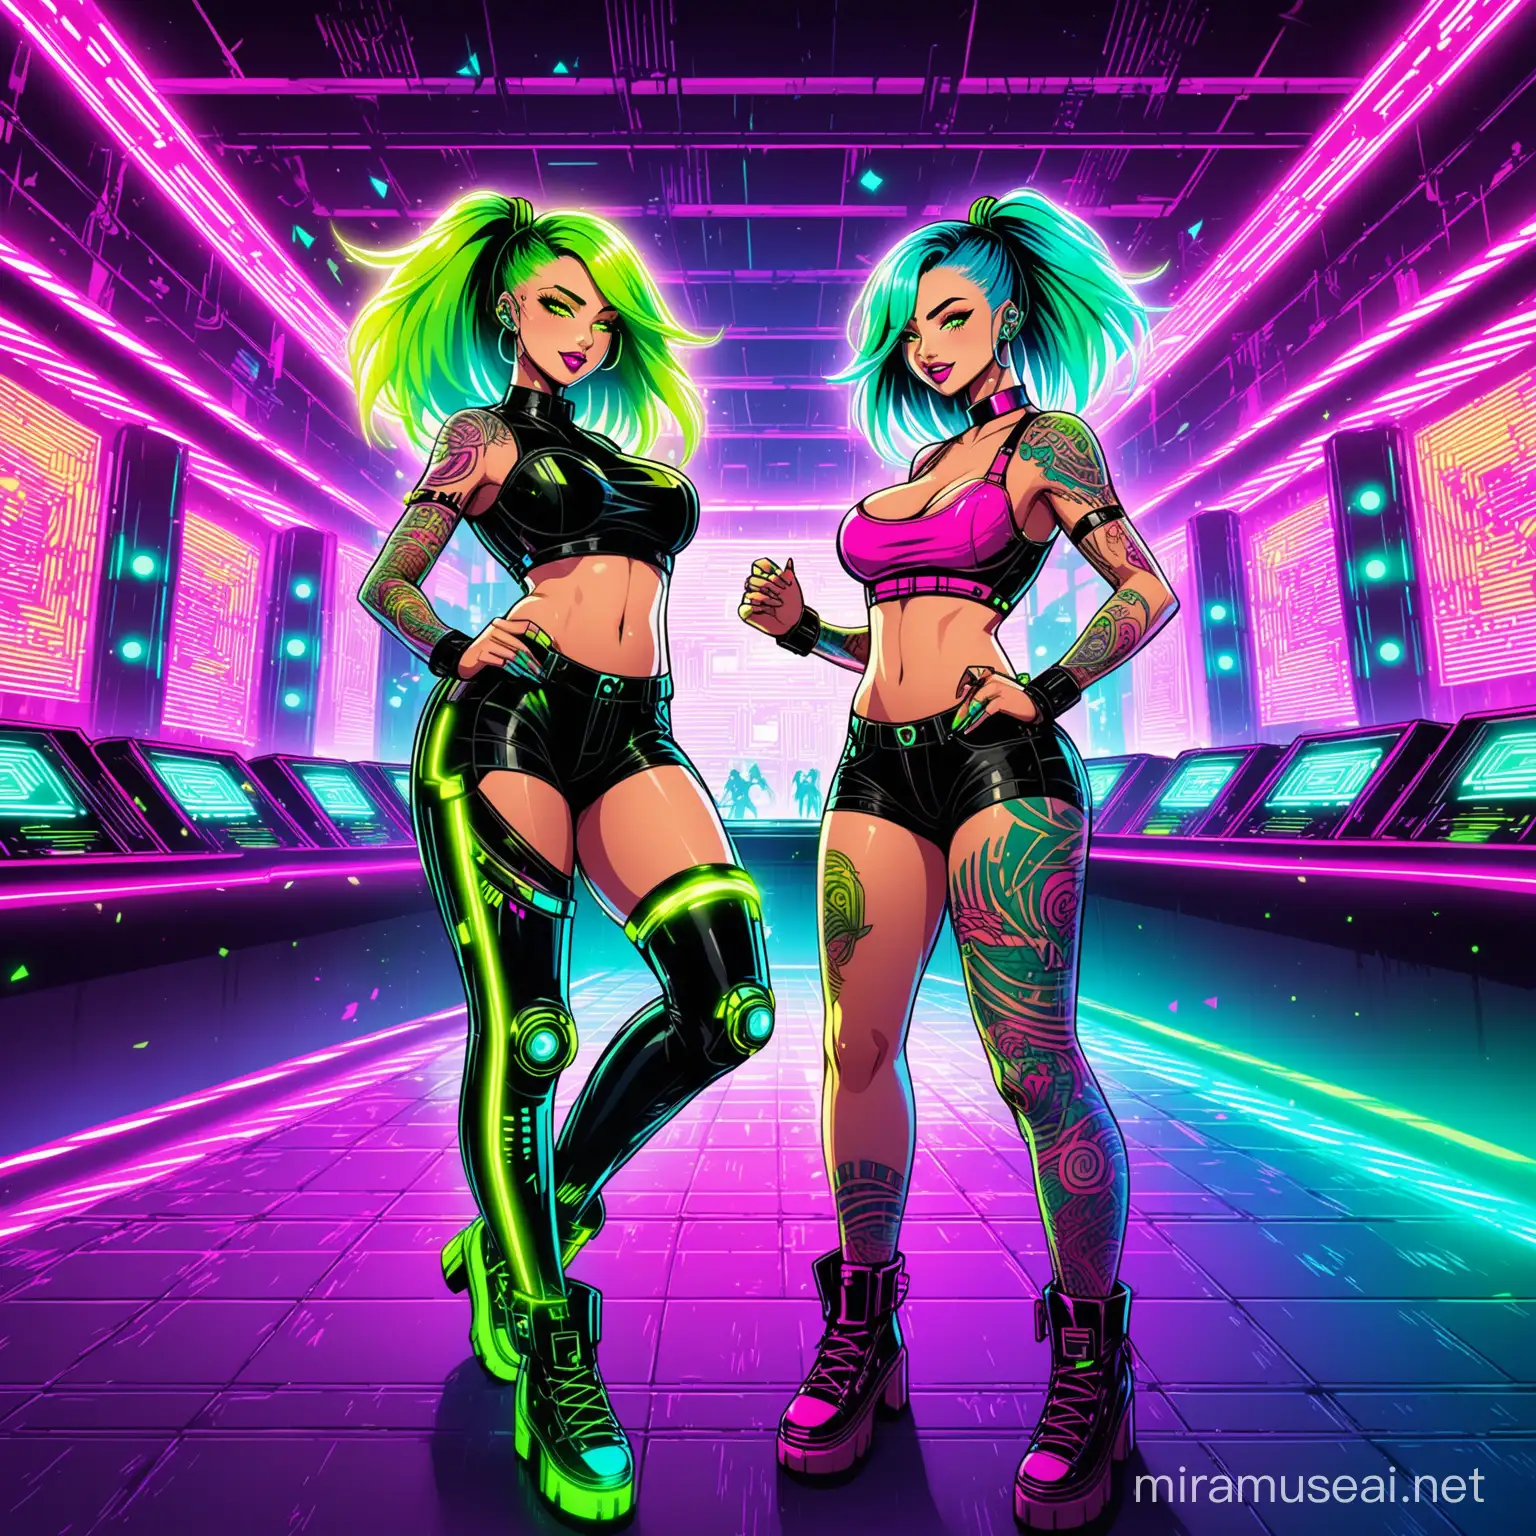 Neon Cyberpunk Dance Vibrant Club Scene with Tattooed Women